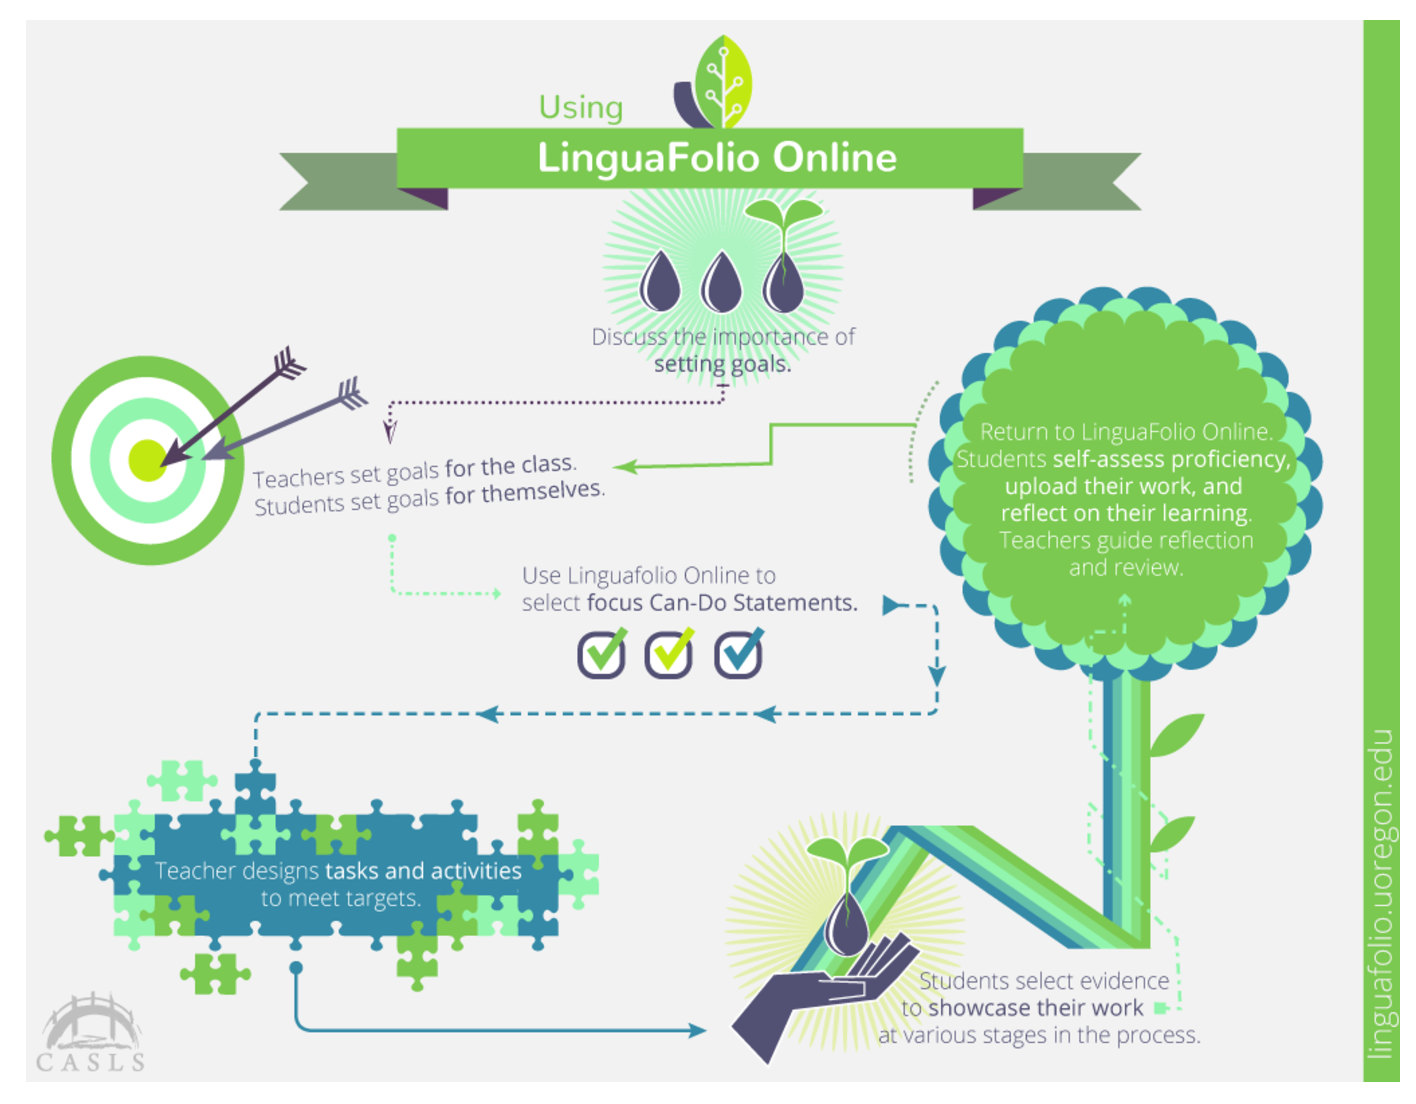 LinguaFolio Online infographic.